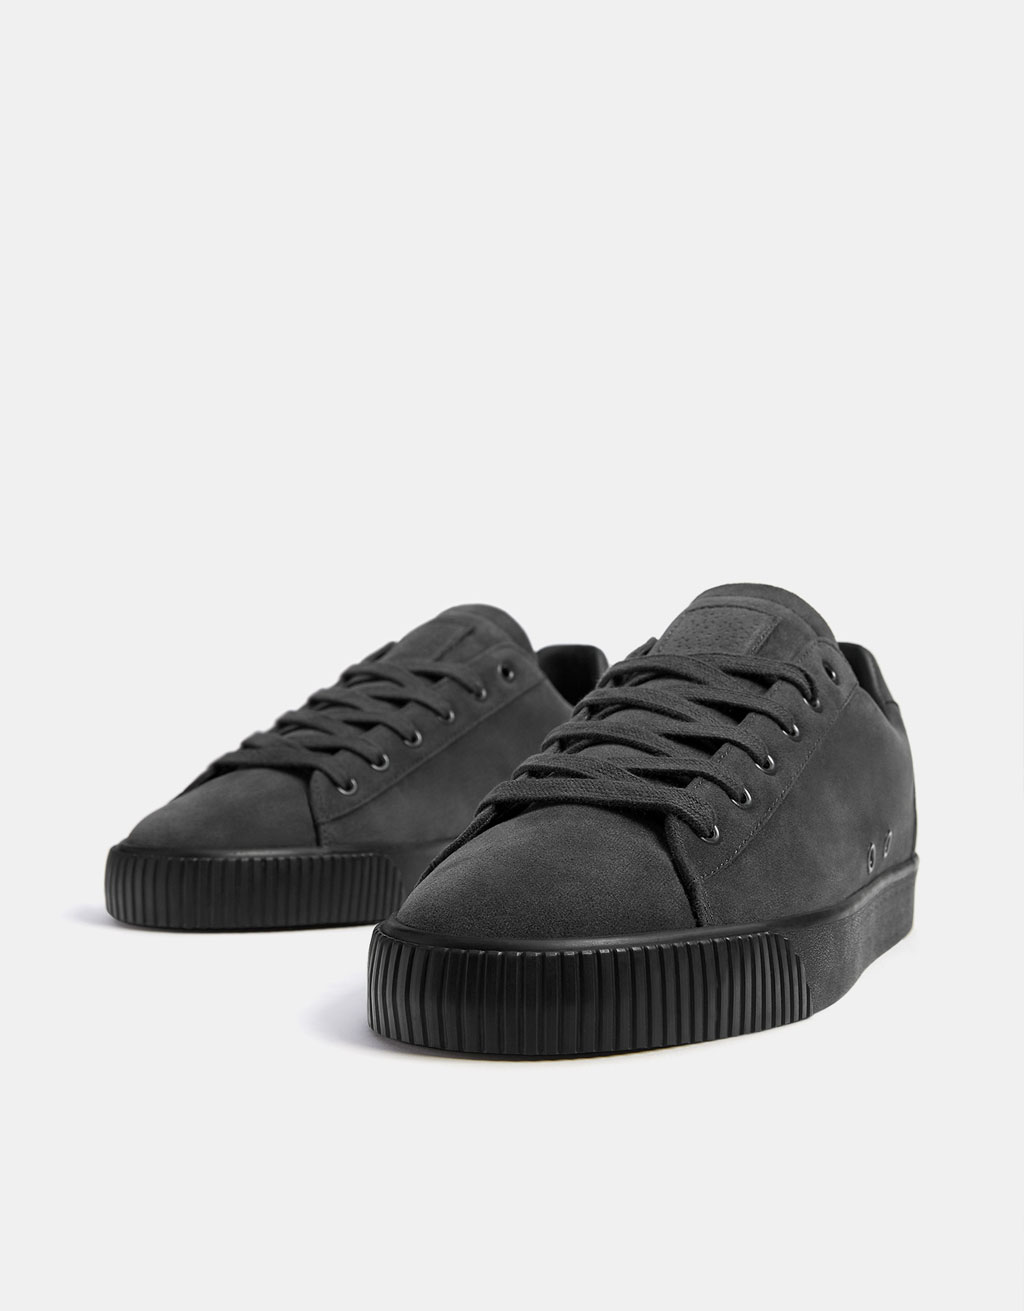 Men’s monochrome fabric sneakers